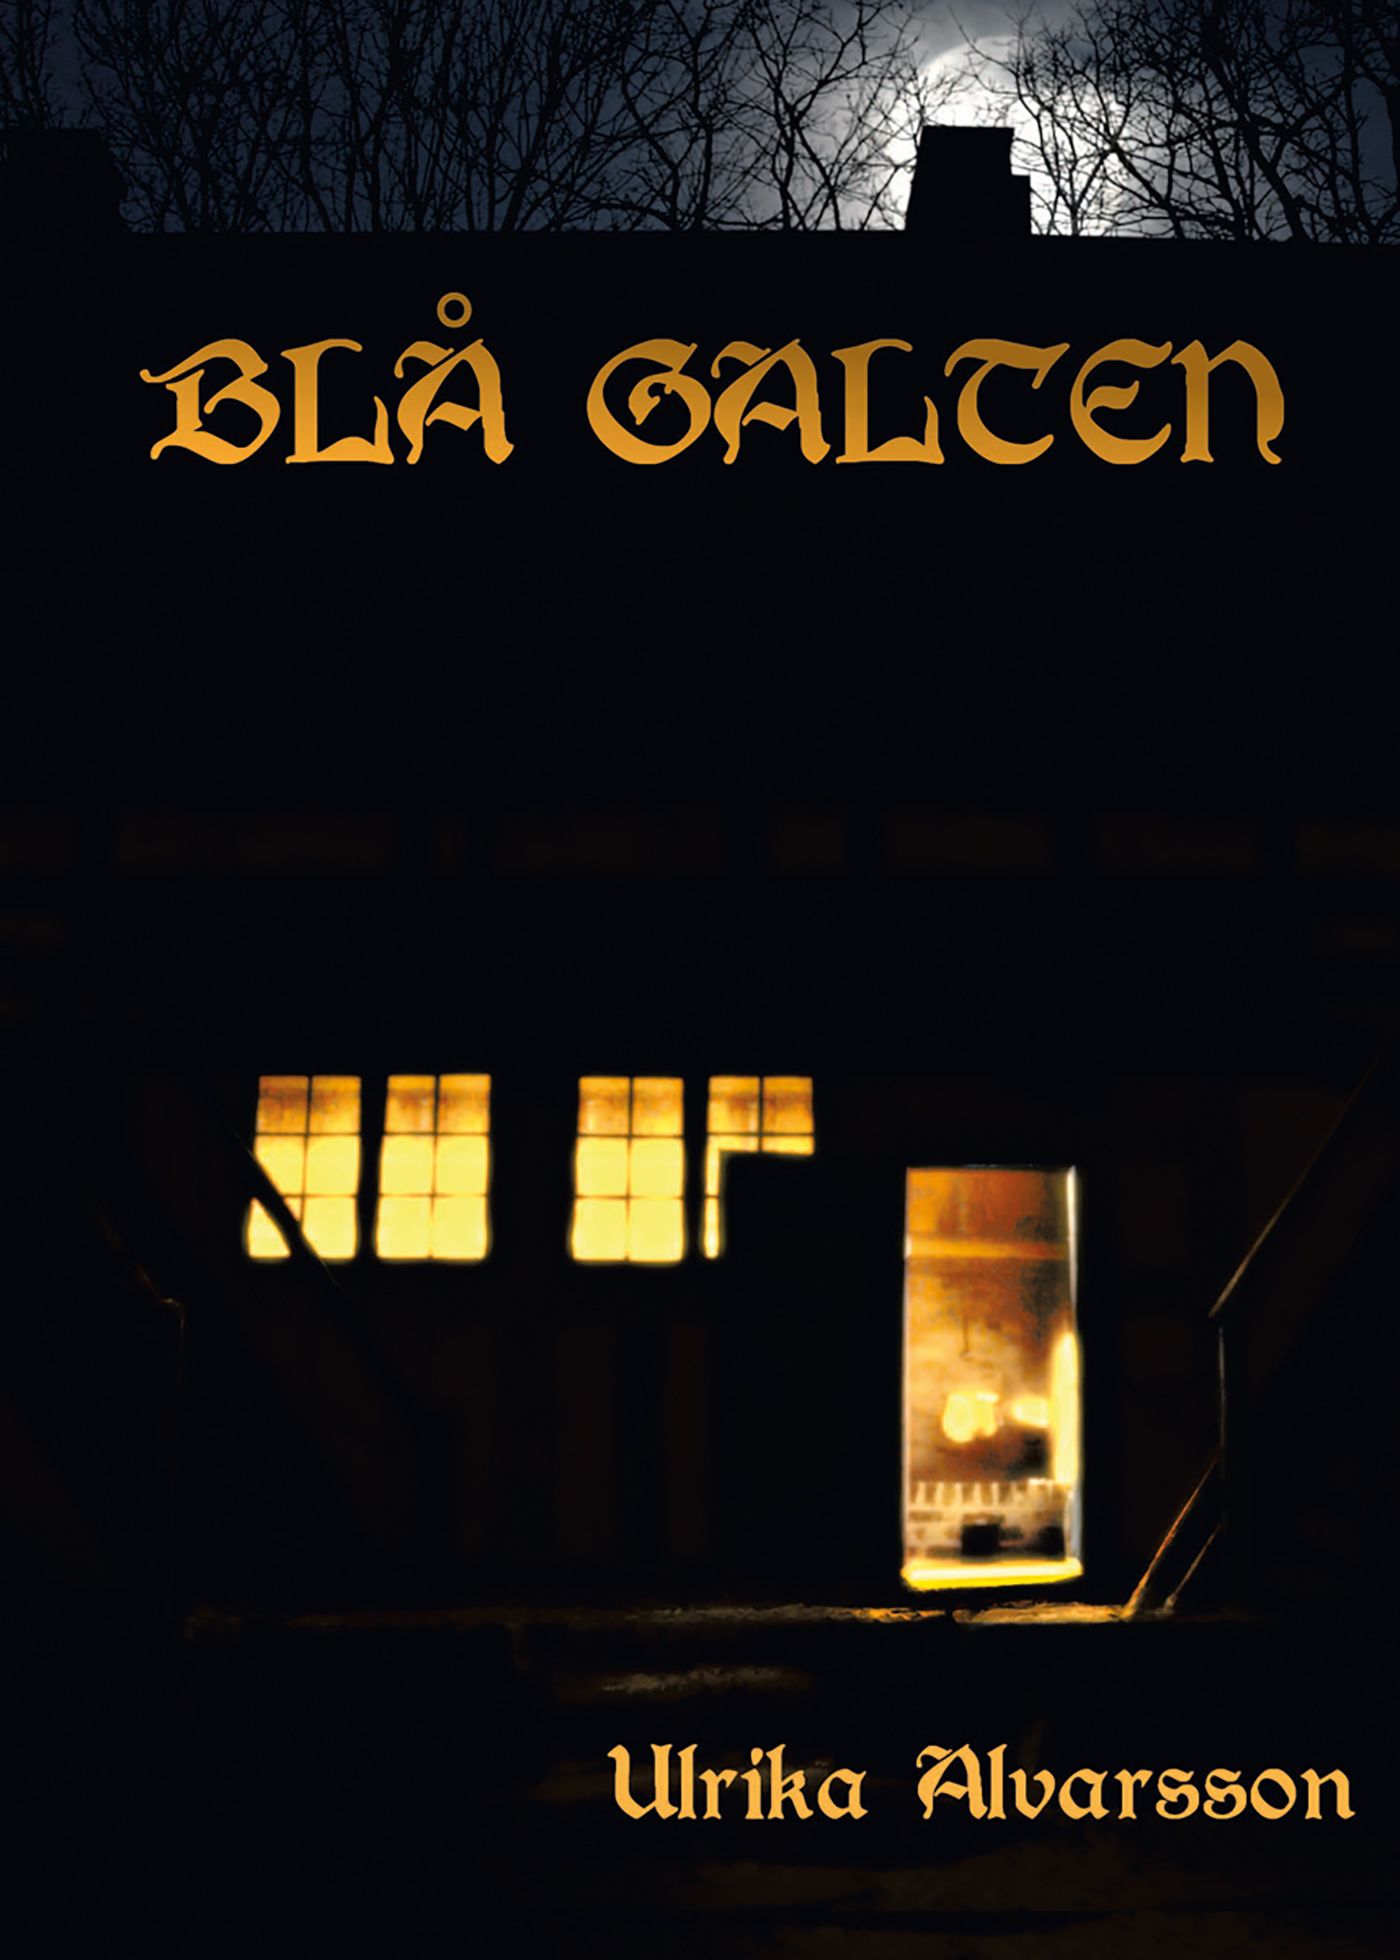 Blå Galten, eBook by Ulrika Alvarsson